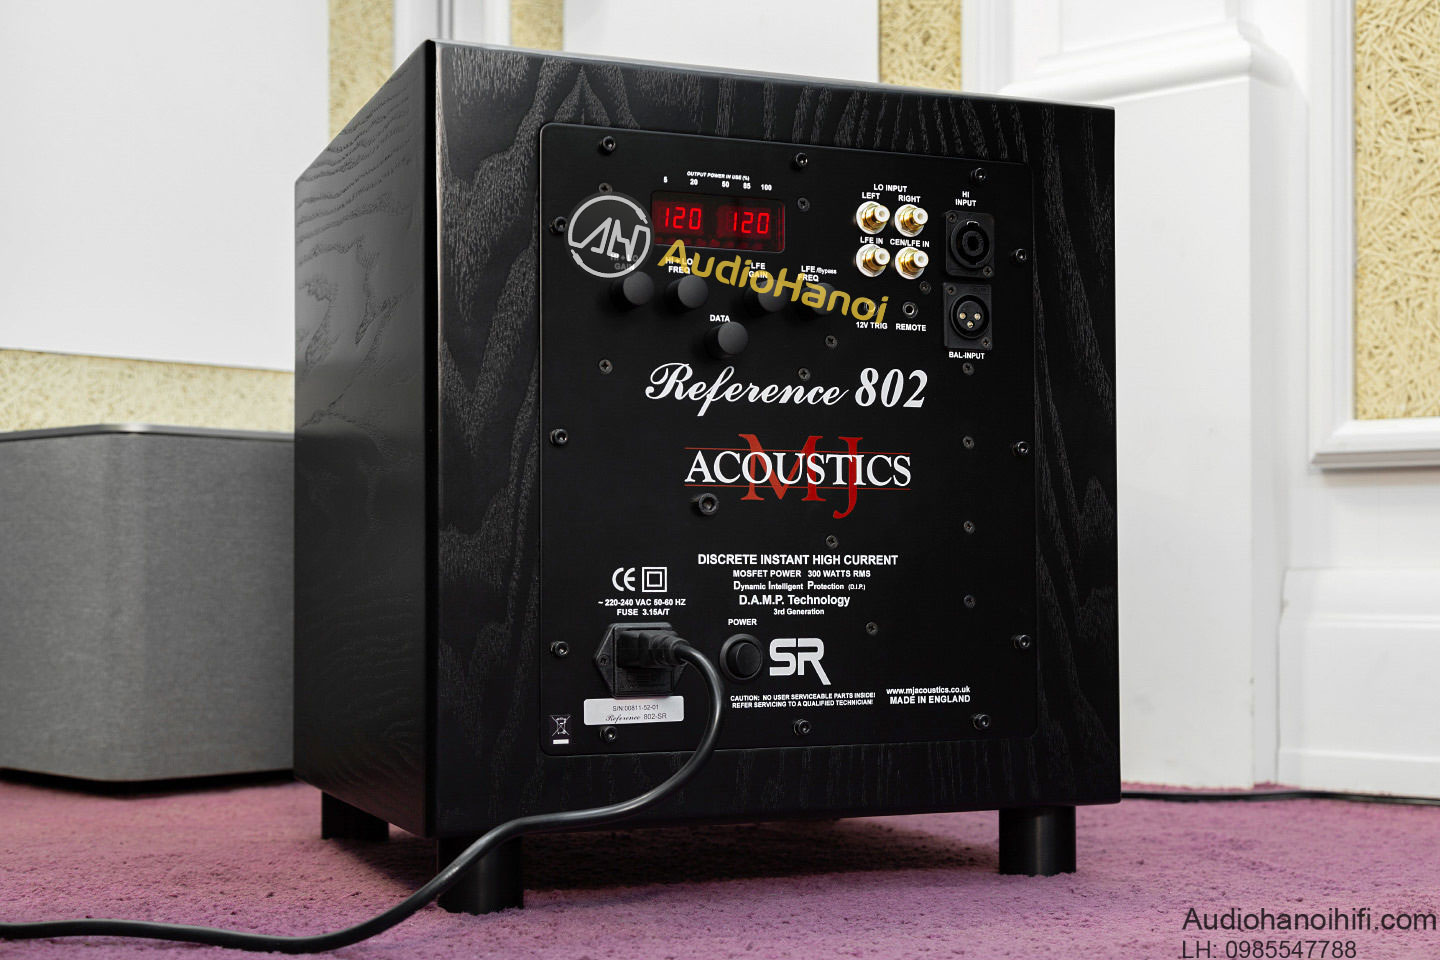 MJ Acoustics REF 802 SRFF sauu